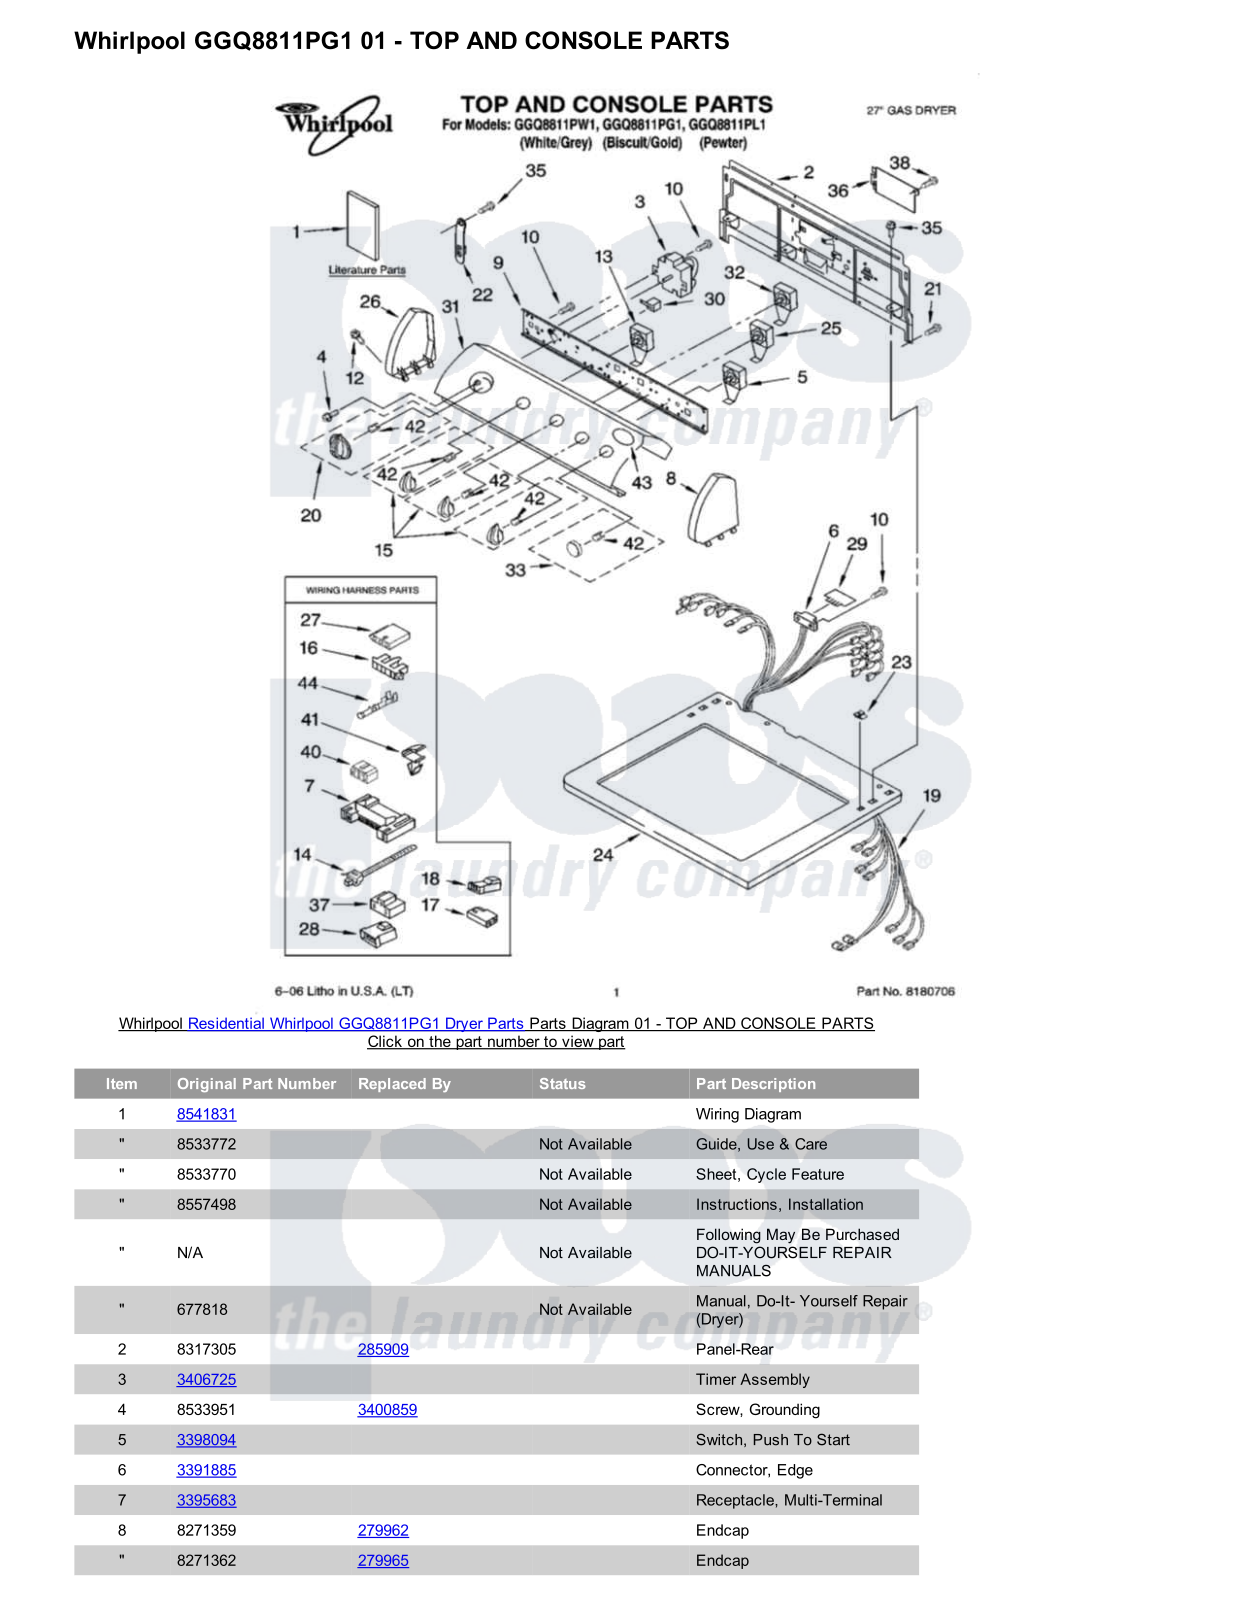 Whirlpool GGQ8811PG1 Parts Diagram